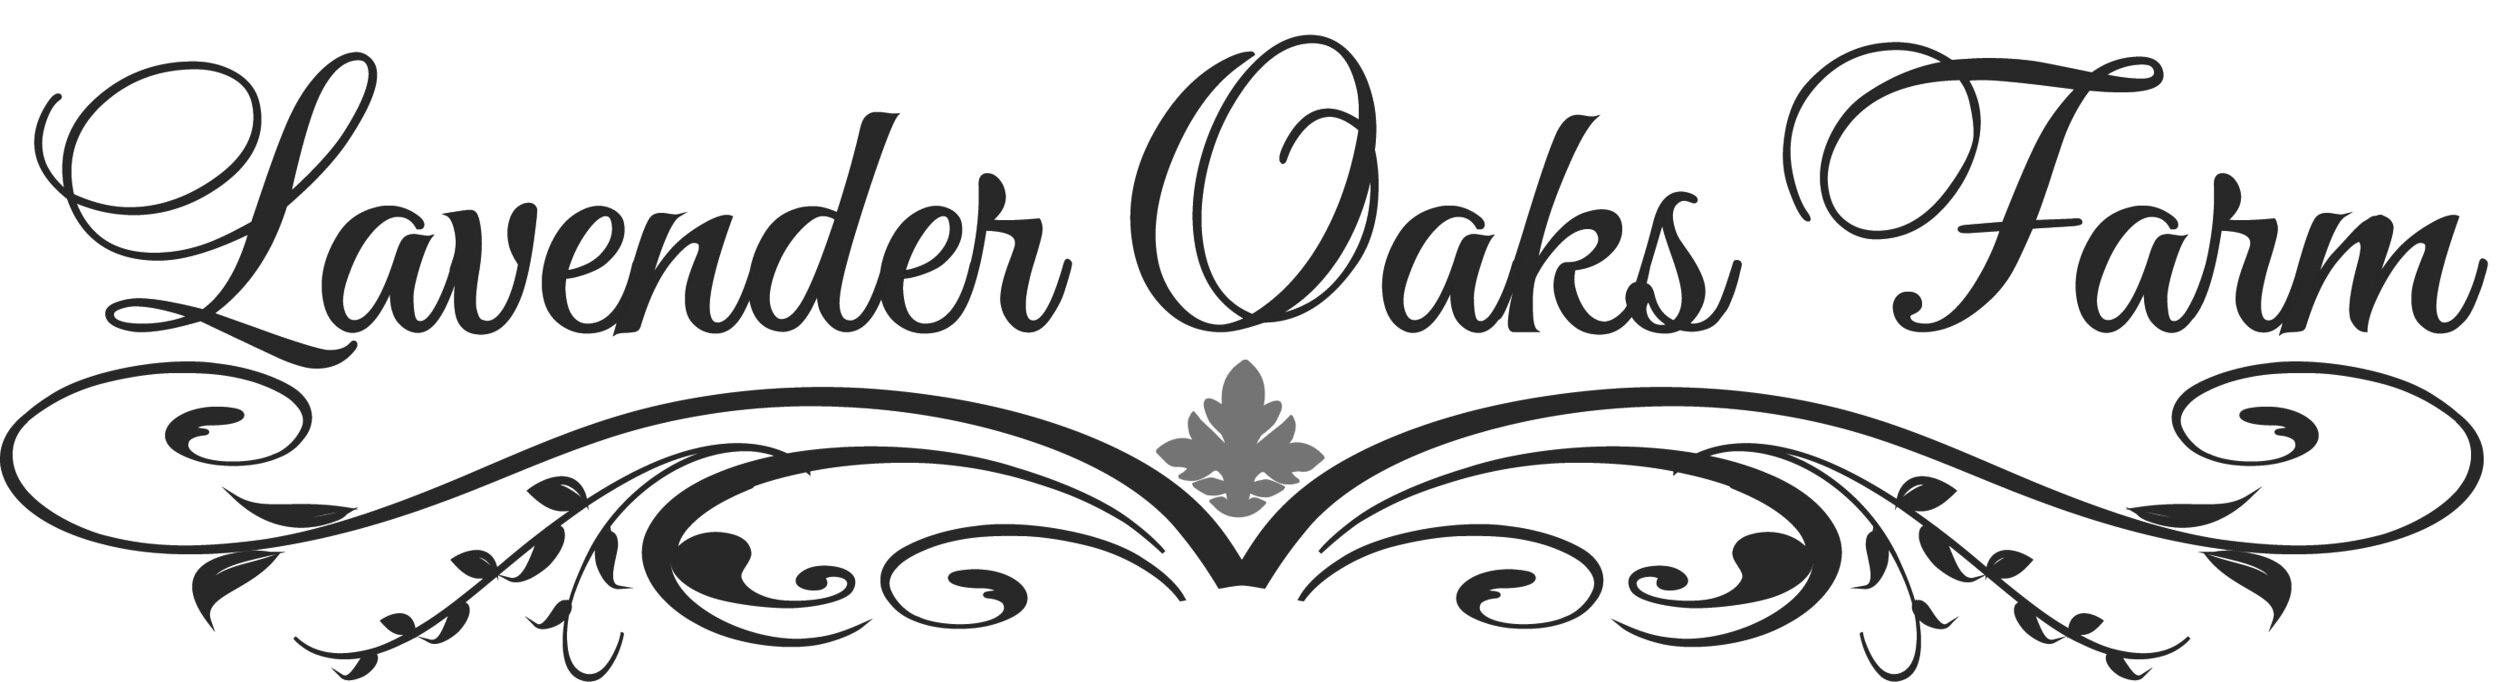 cropped-cropped-lavender-oaks-farm-logo-final-logo-in-color-no-chapel-hill.jpg